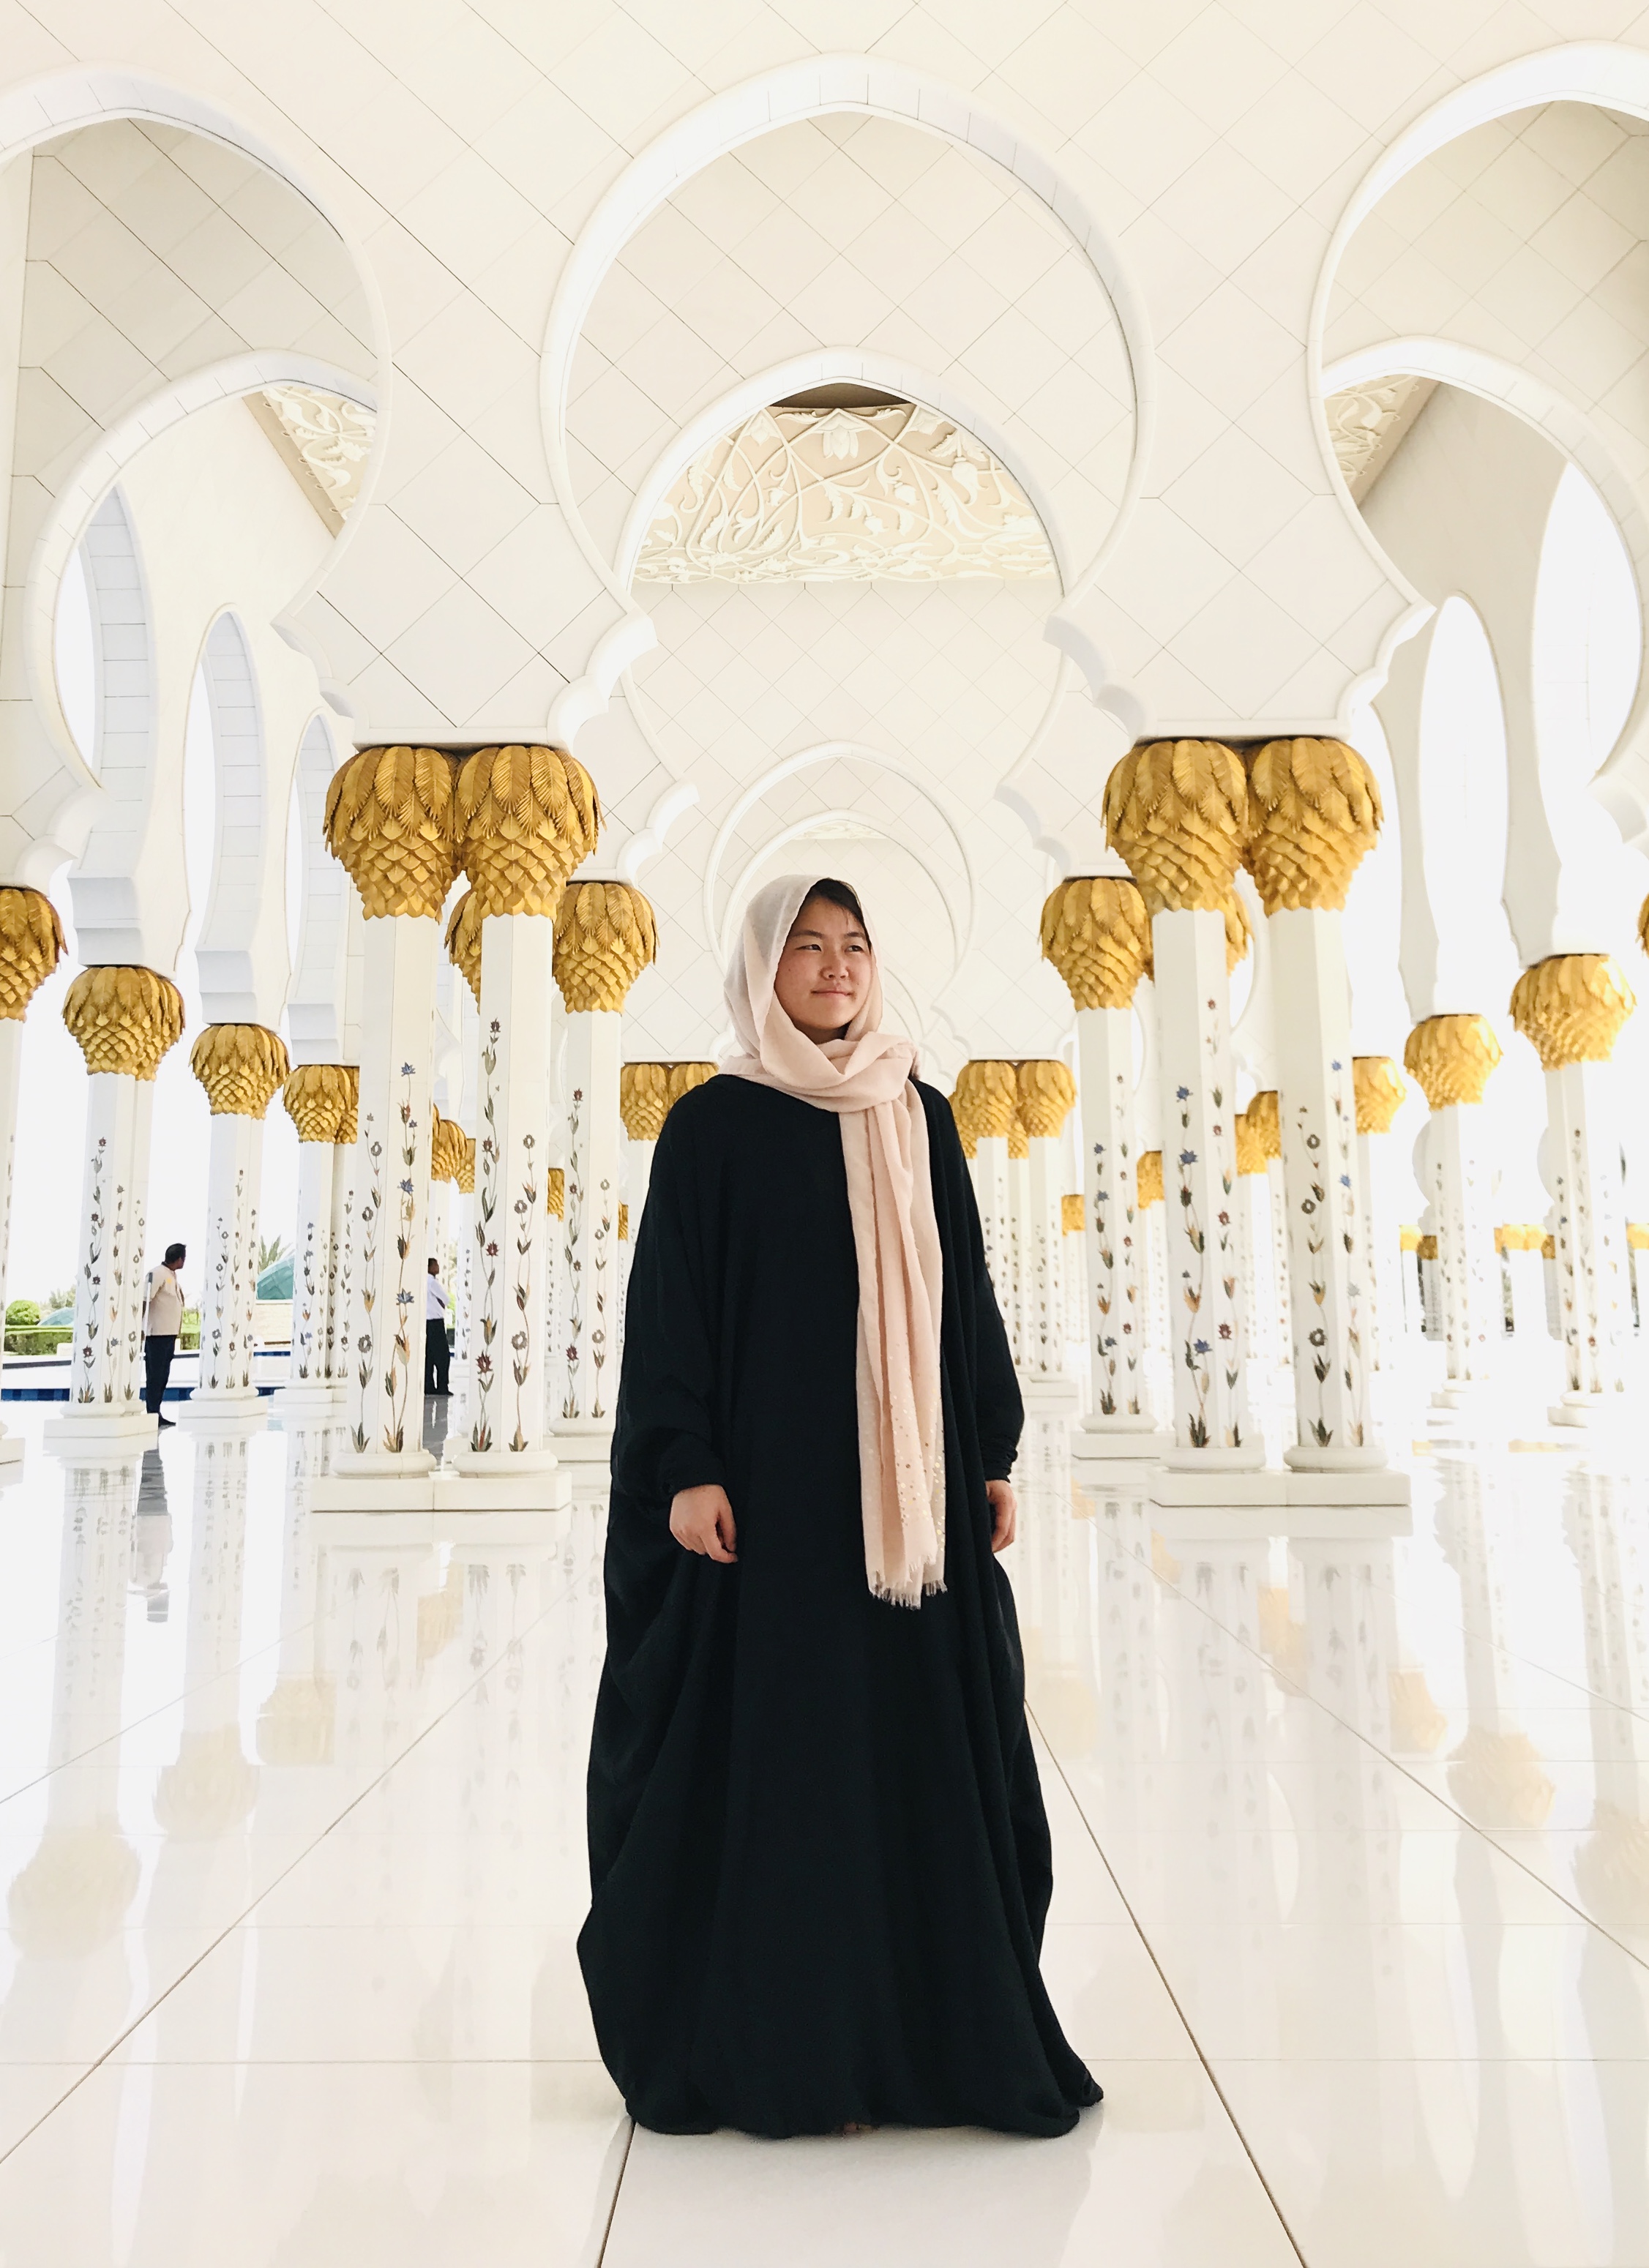 In an Abu Dhabi mosque